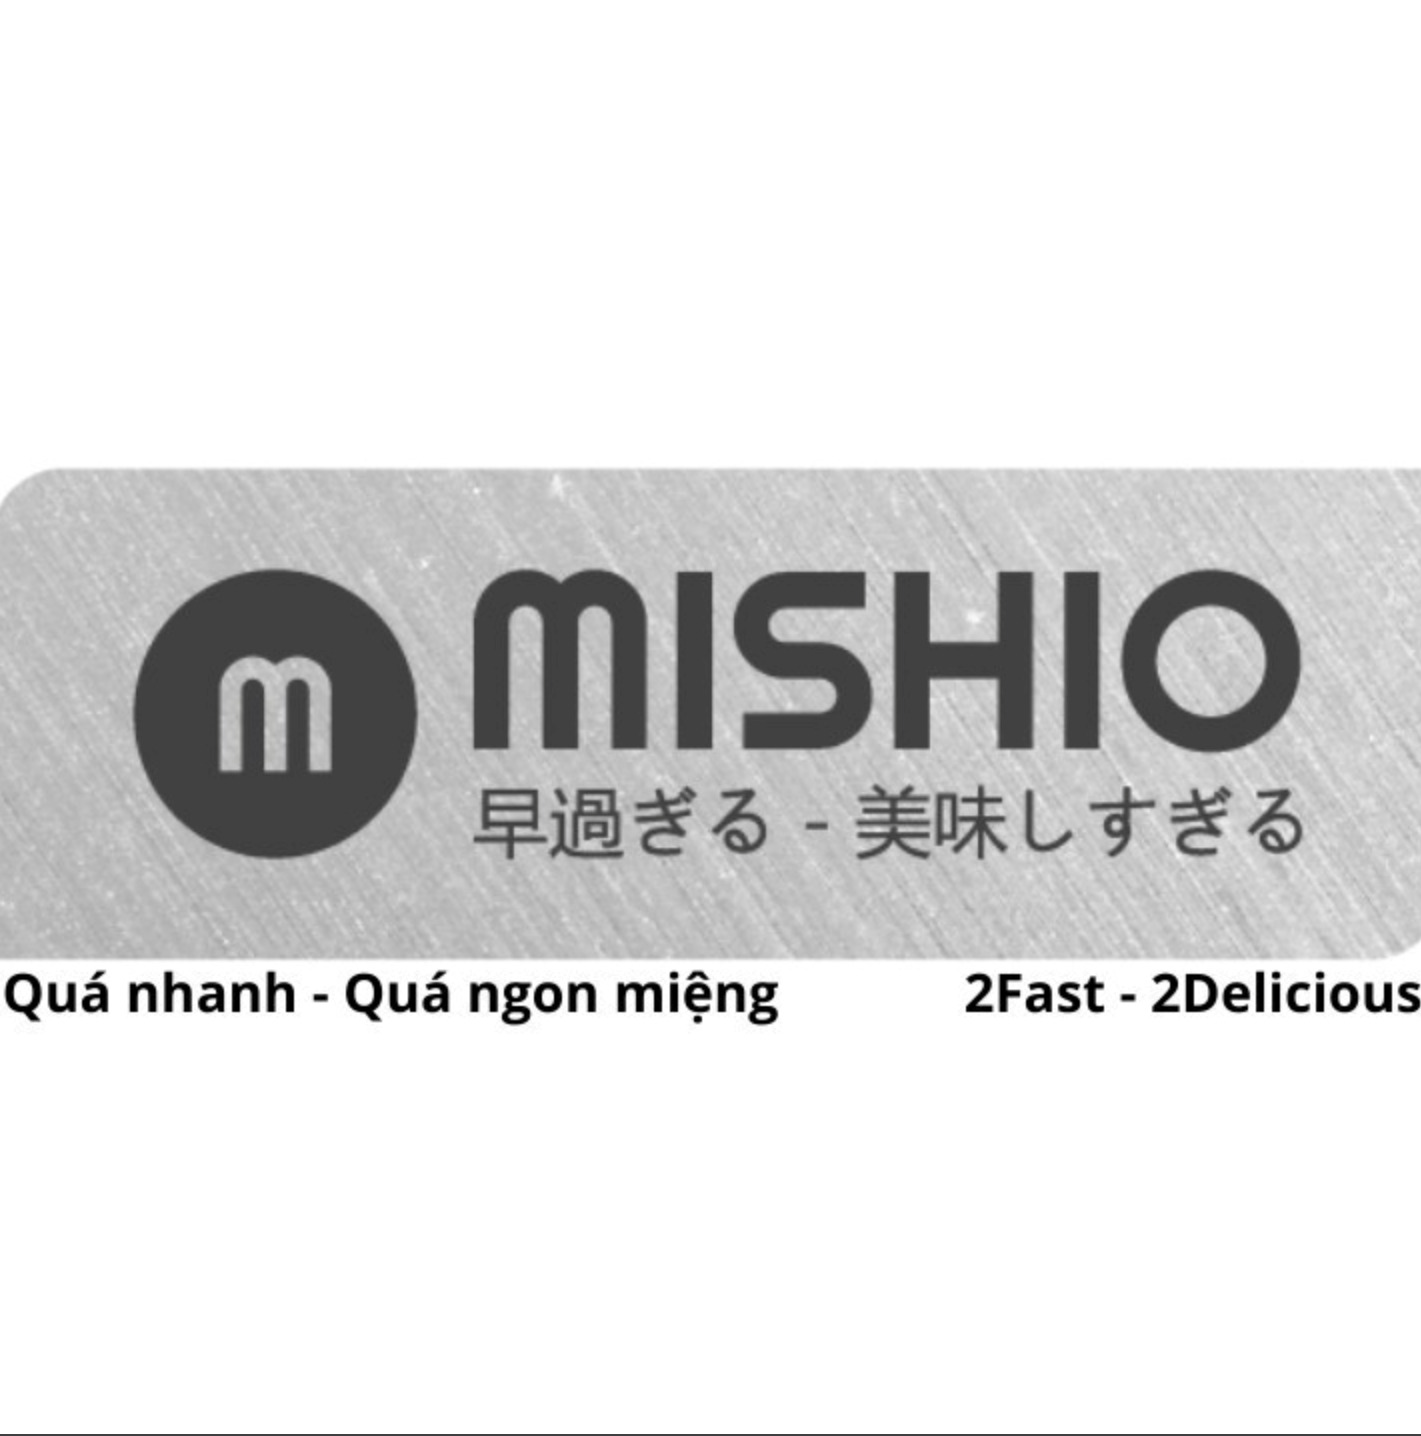 Mishio logo